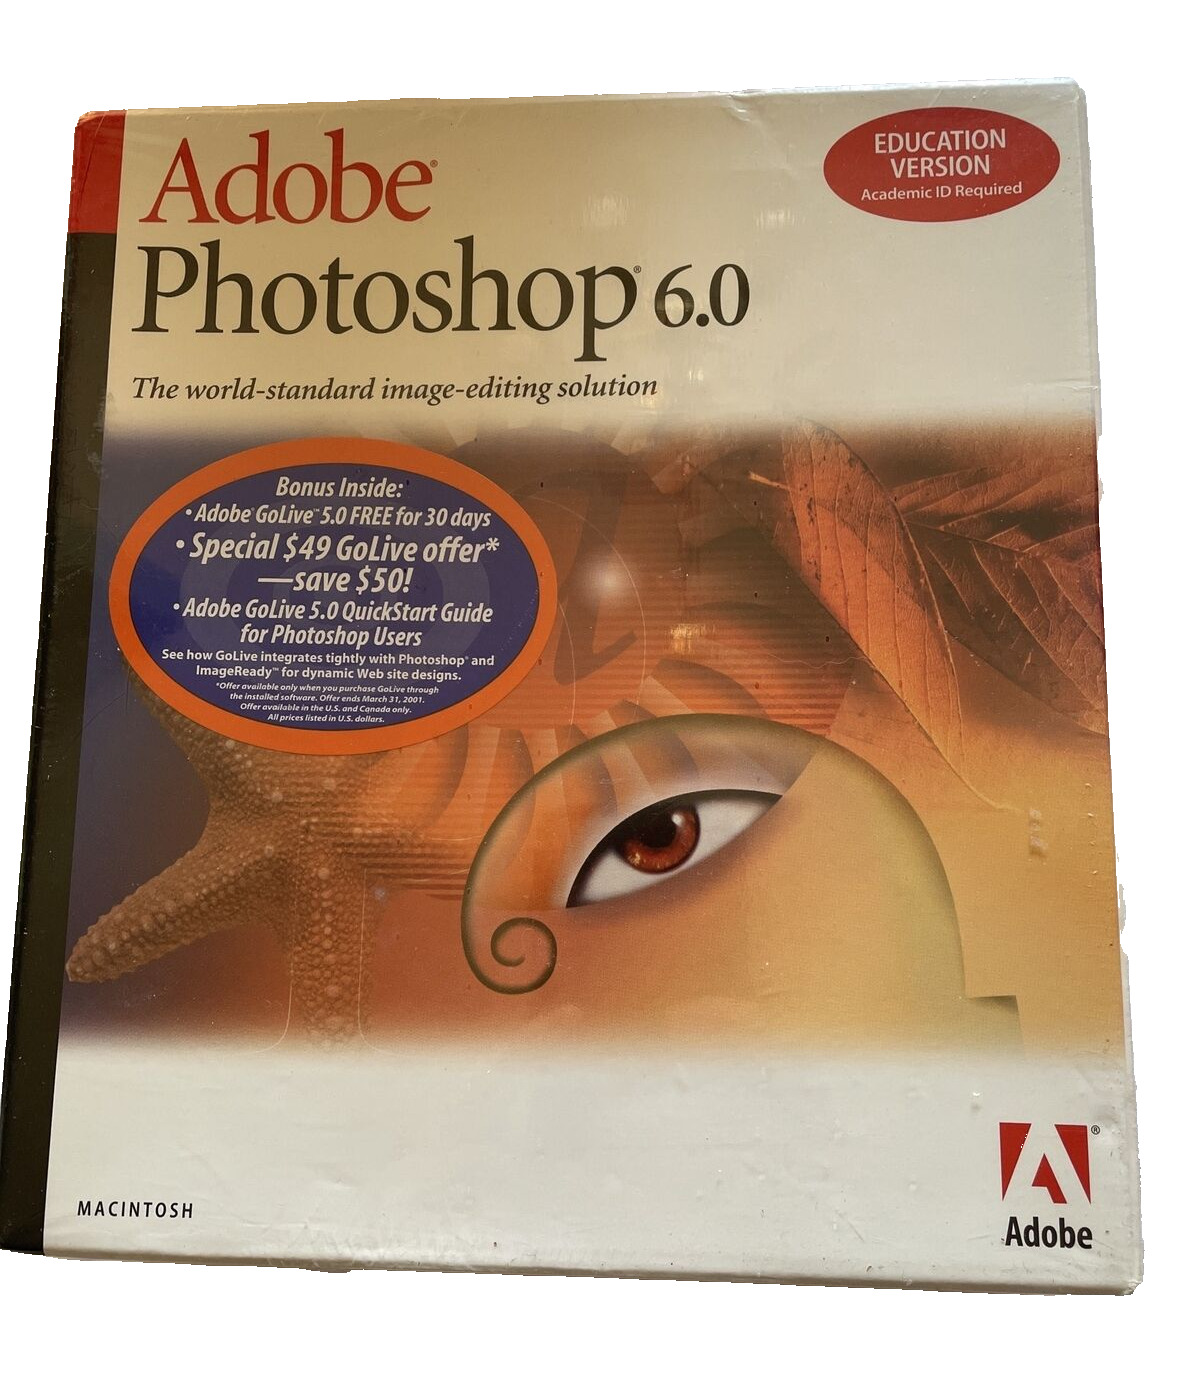 Adobe Photoshop 6.0 Windows Sealed English Education Academic ID Vintage Tech